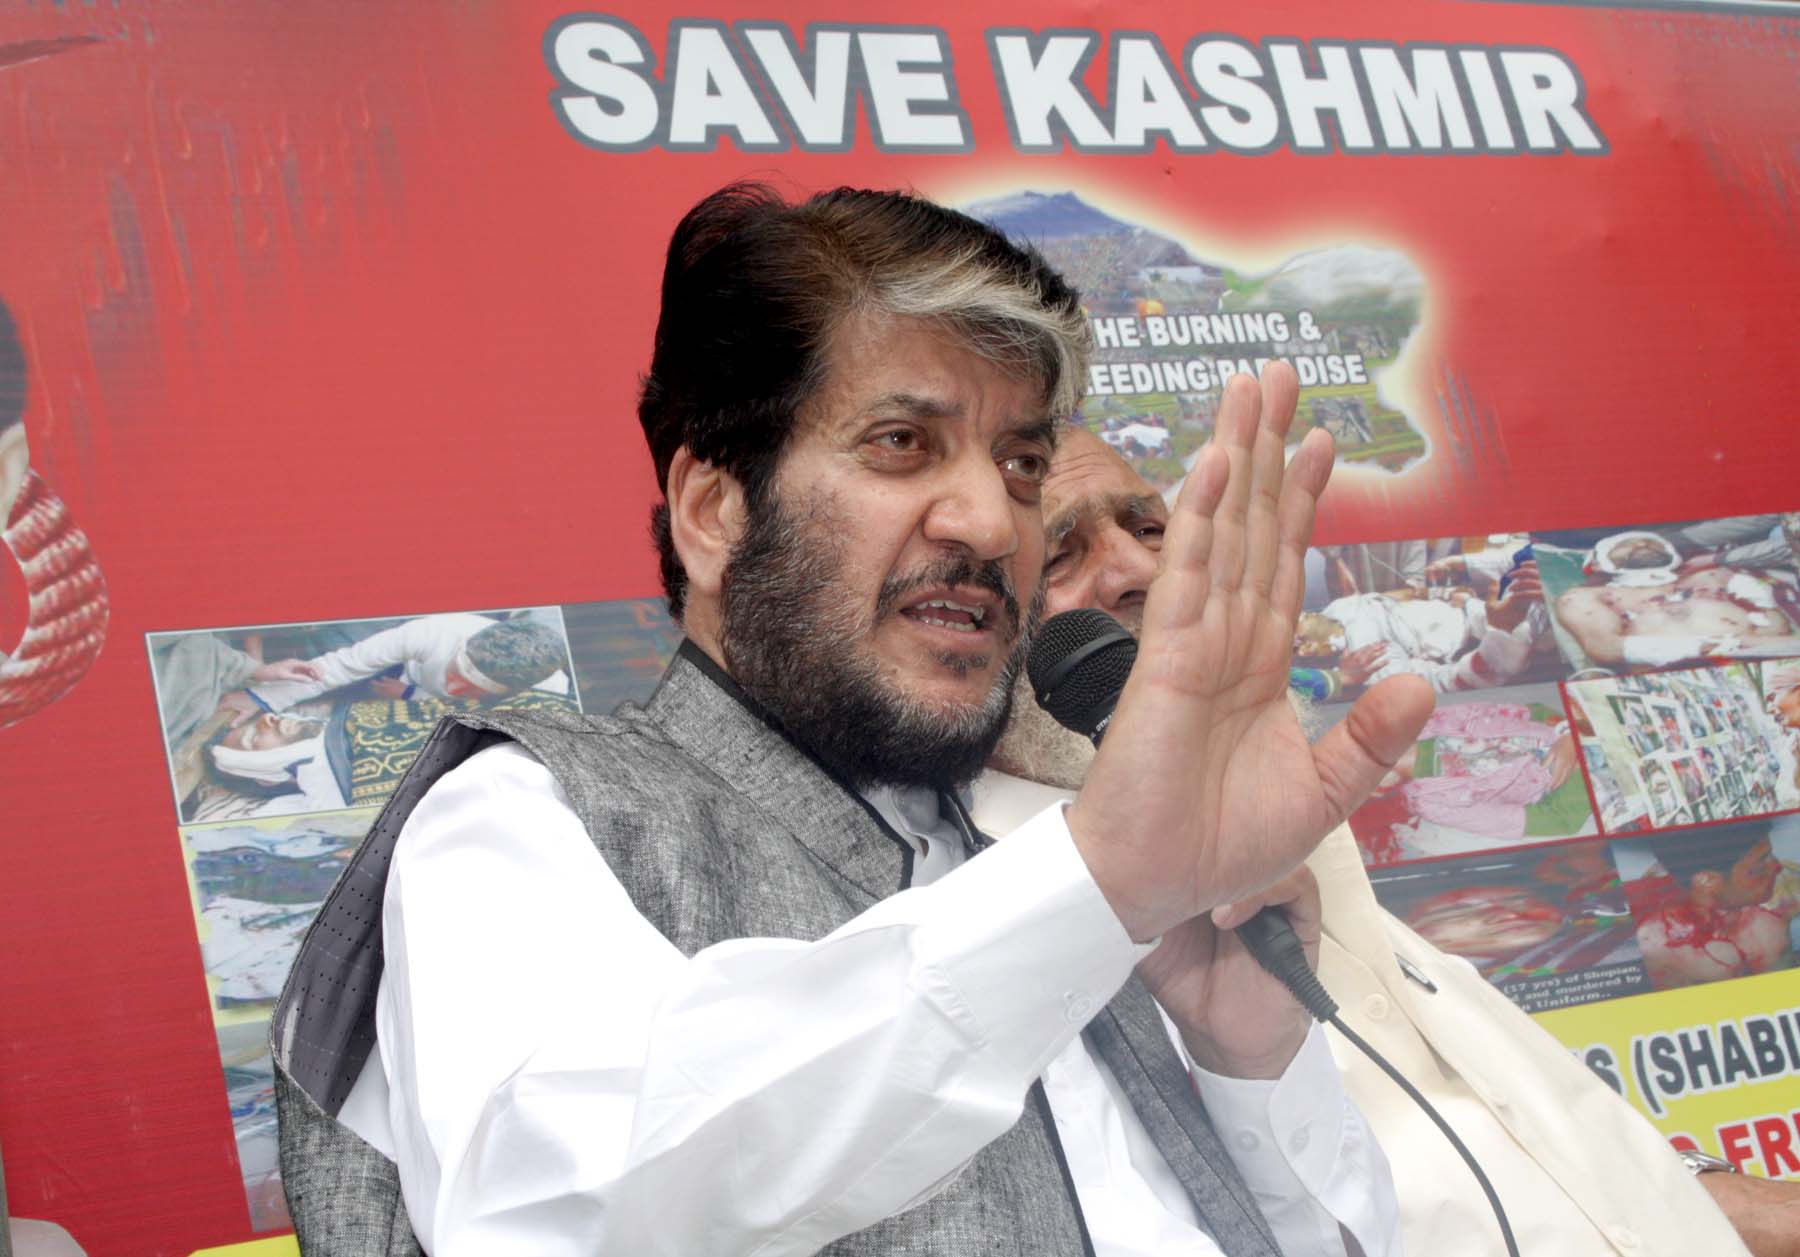 Hurriyat leader Shabir Shah arrested in Kashmir